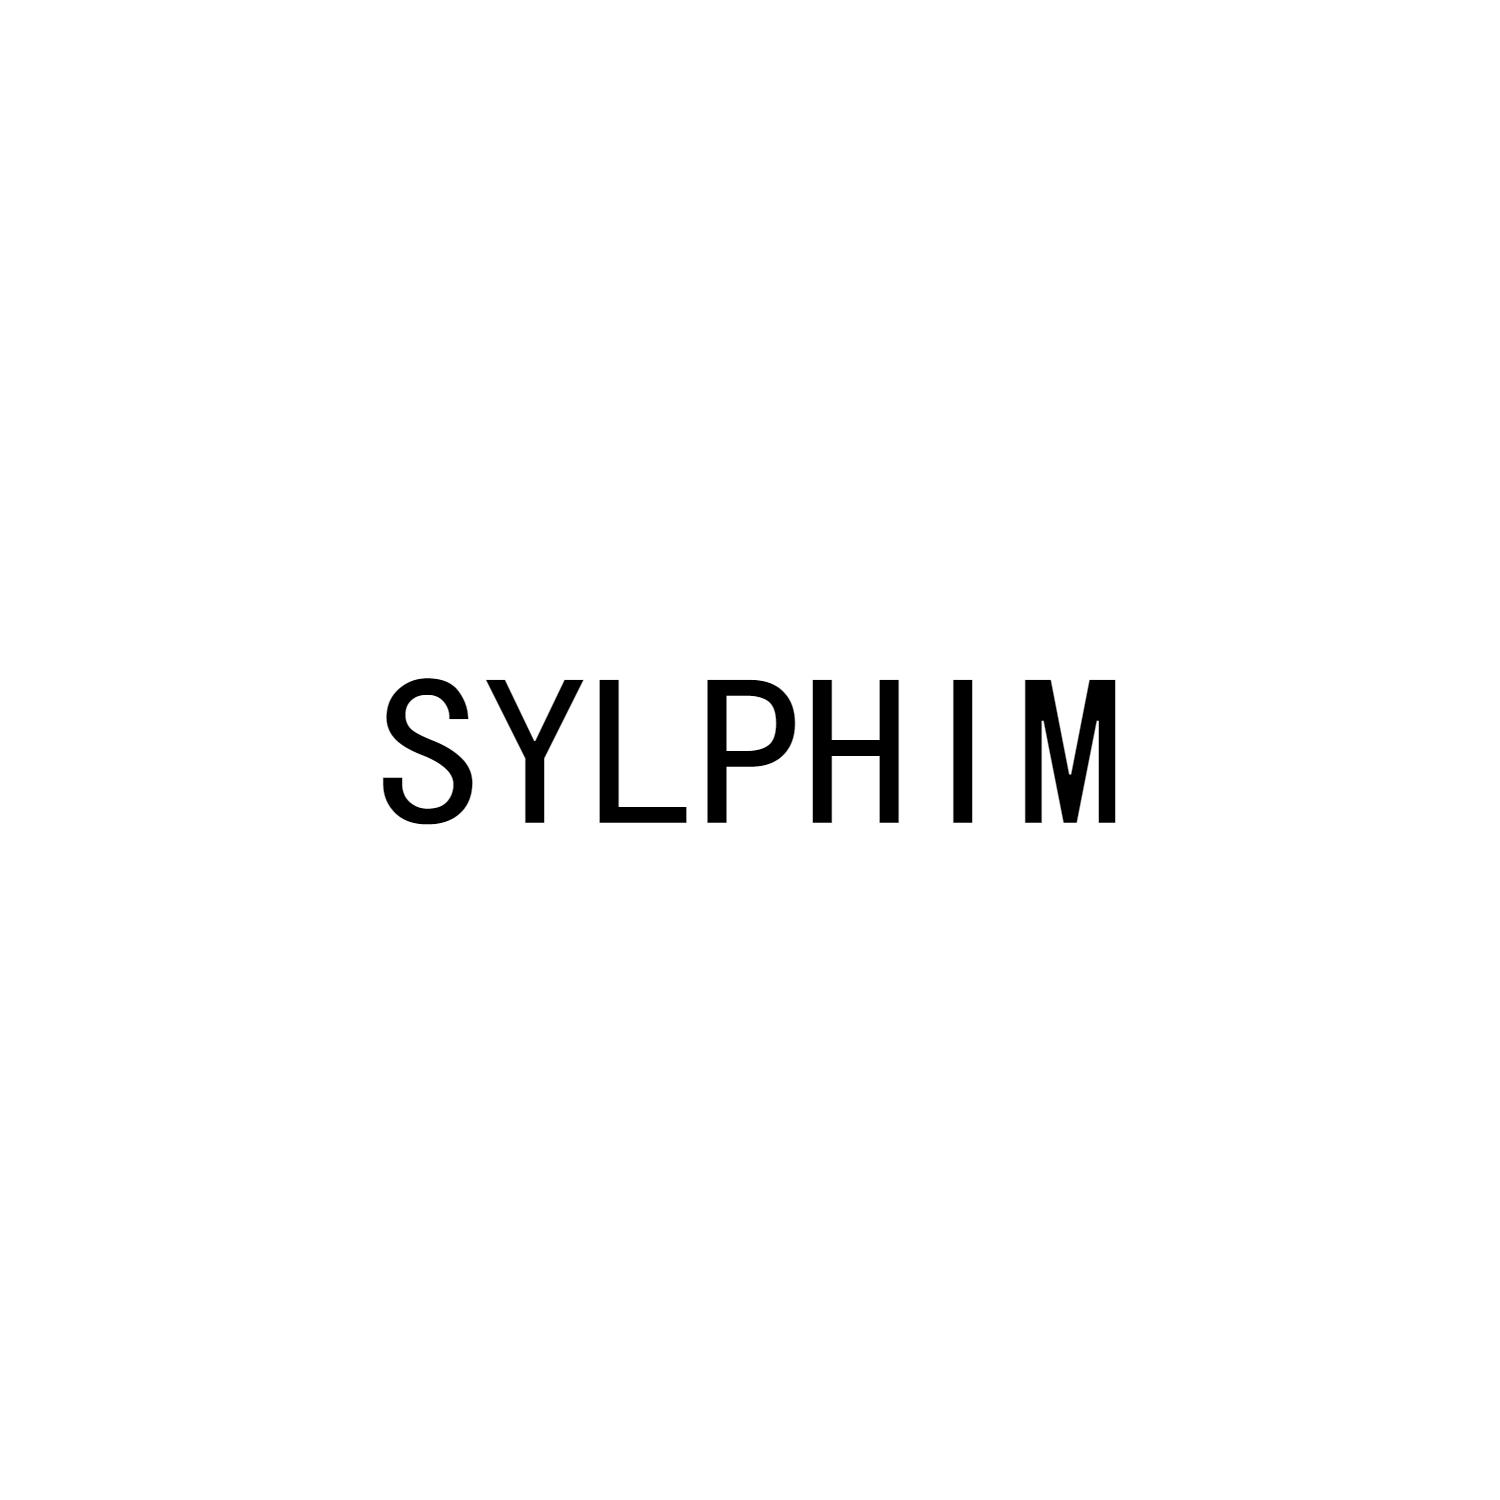 SYLPHIM